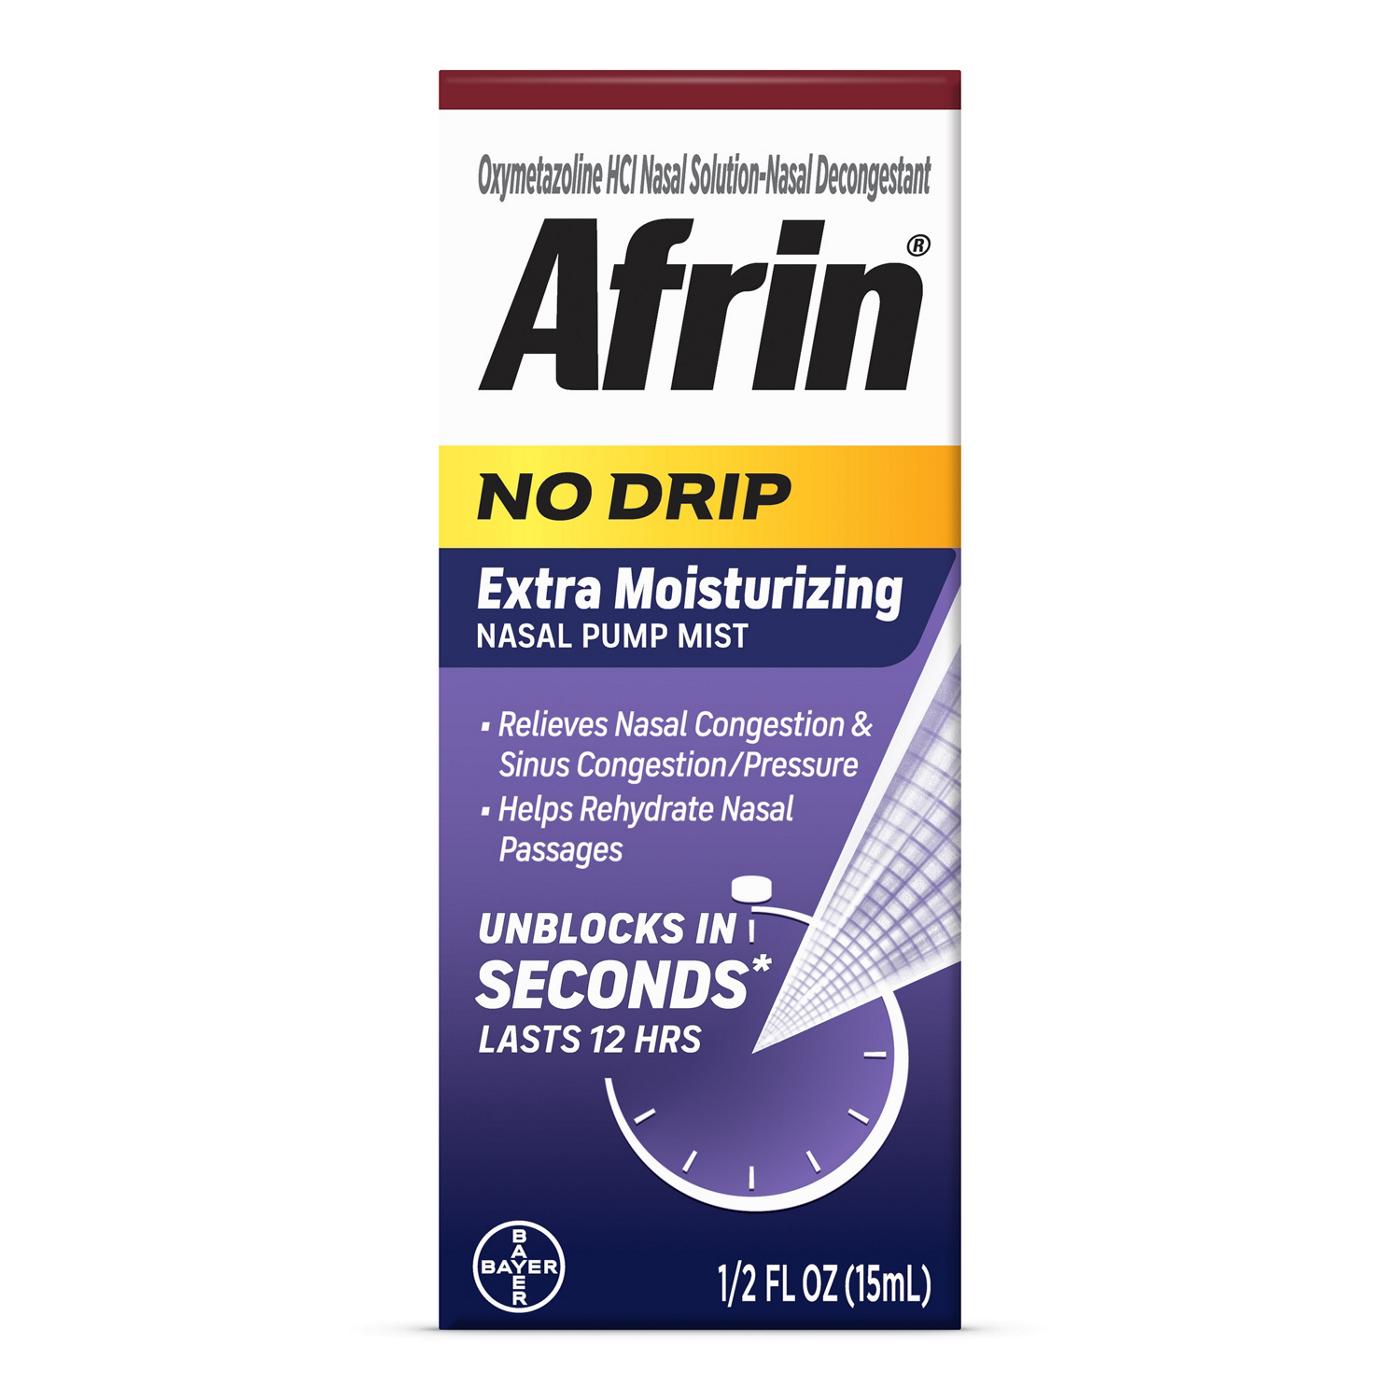 Afrin No Drip Extra Moisturizing Pump Mist; image 1 of 2